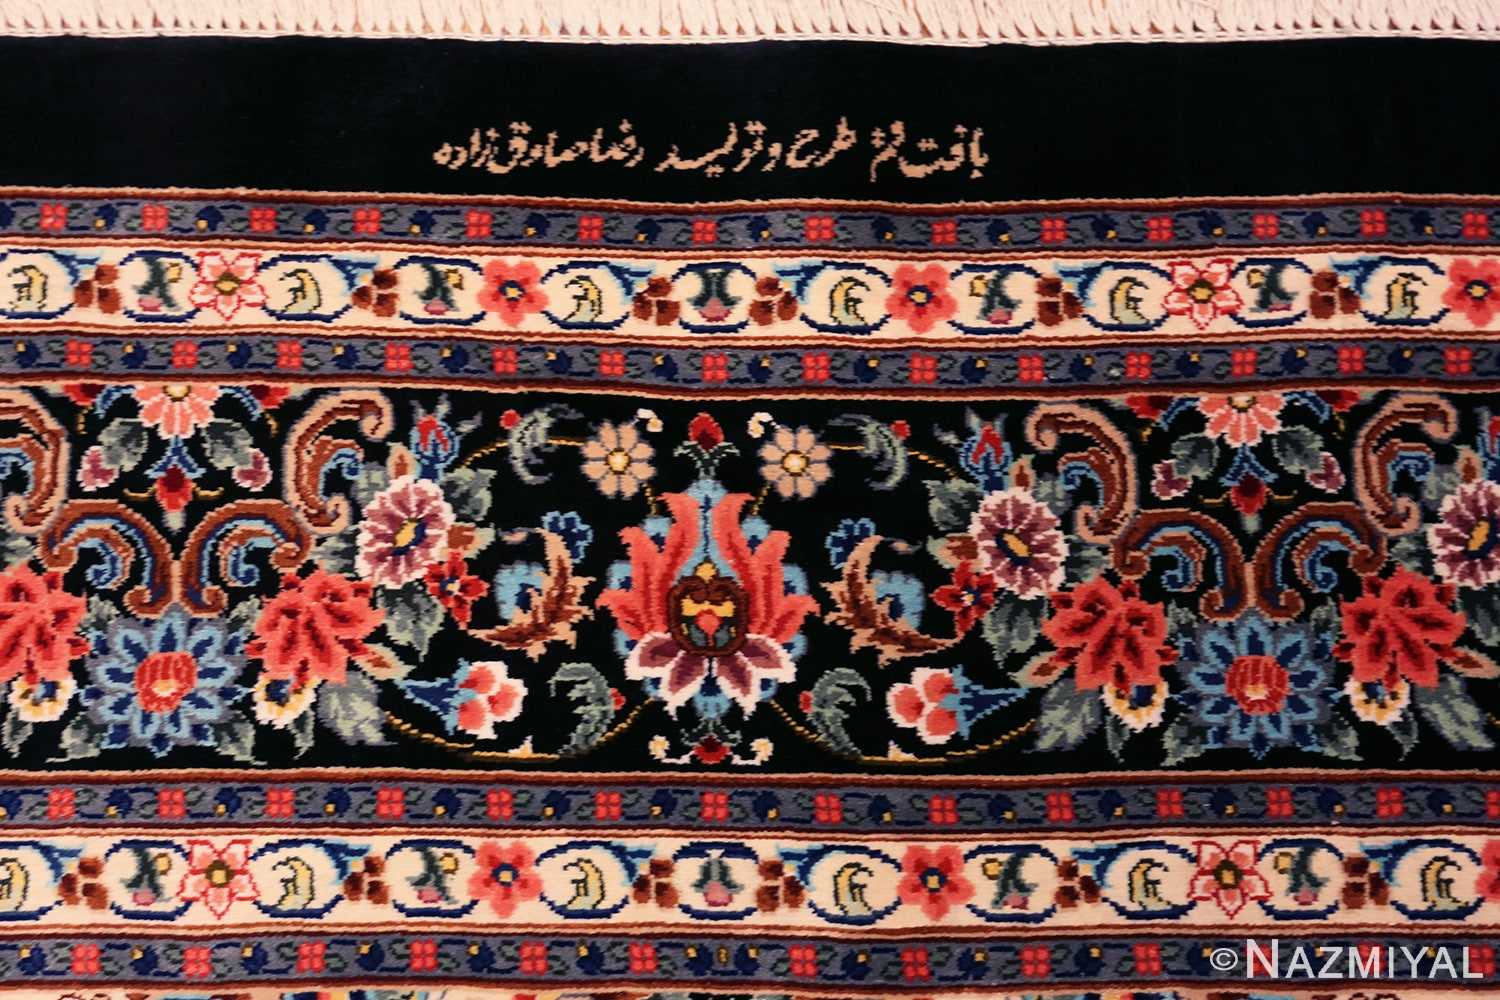 Signature Of Floral Vintage Persian Silk Qum Medallion Rug 70786 by Nazmiyal NYC